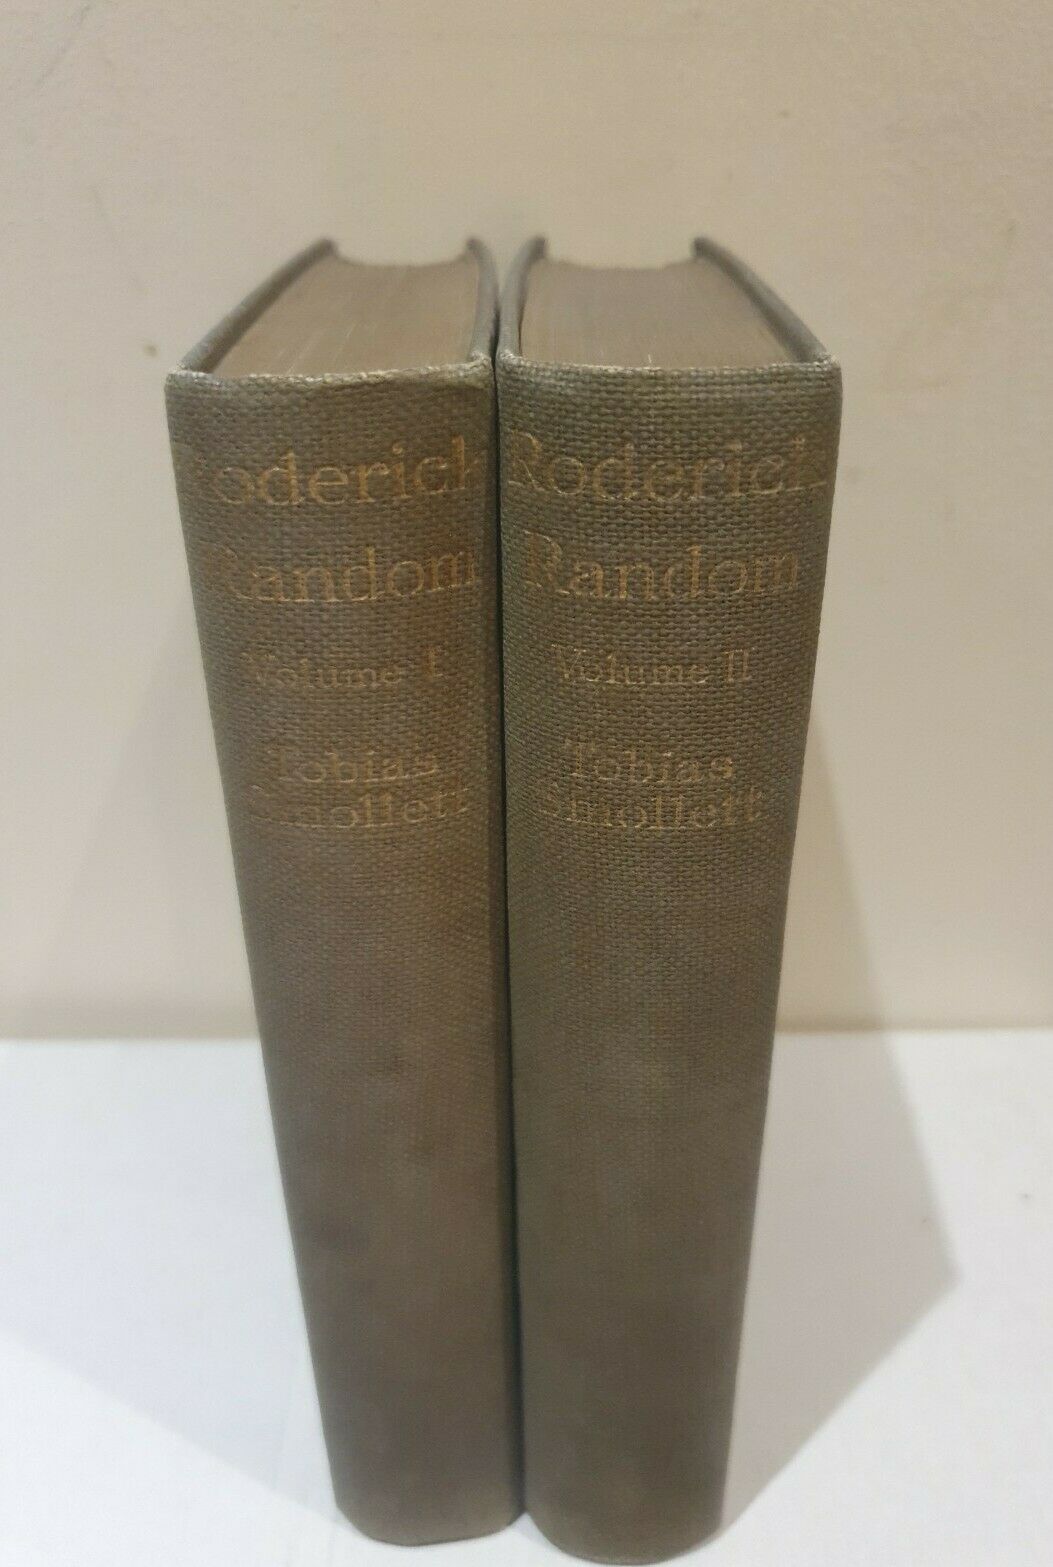 Roderick Random Volume I & II - Tobias Smollett (1926)